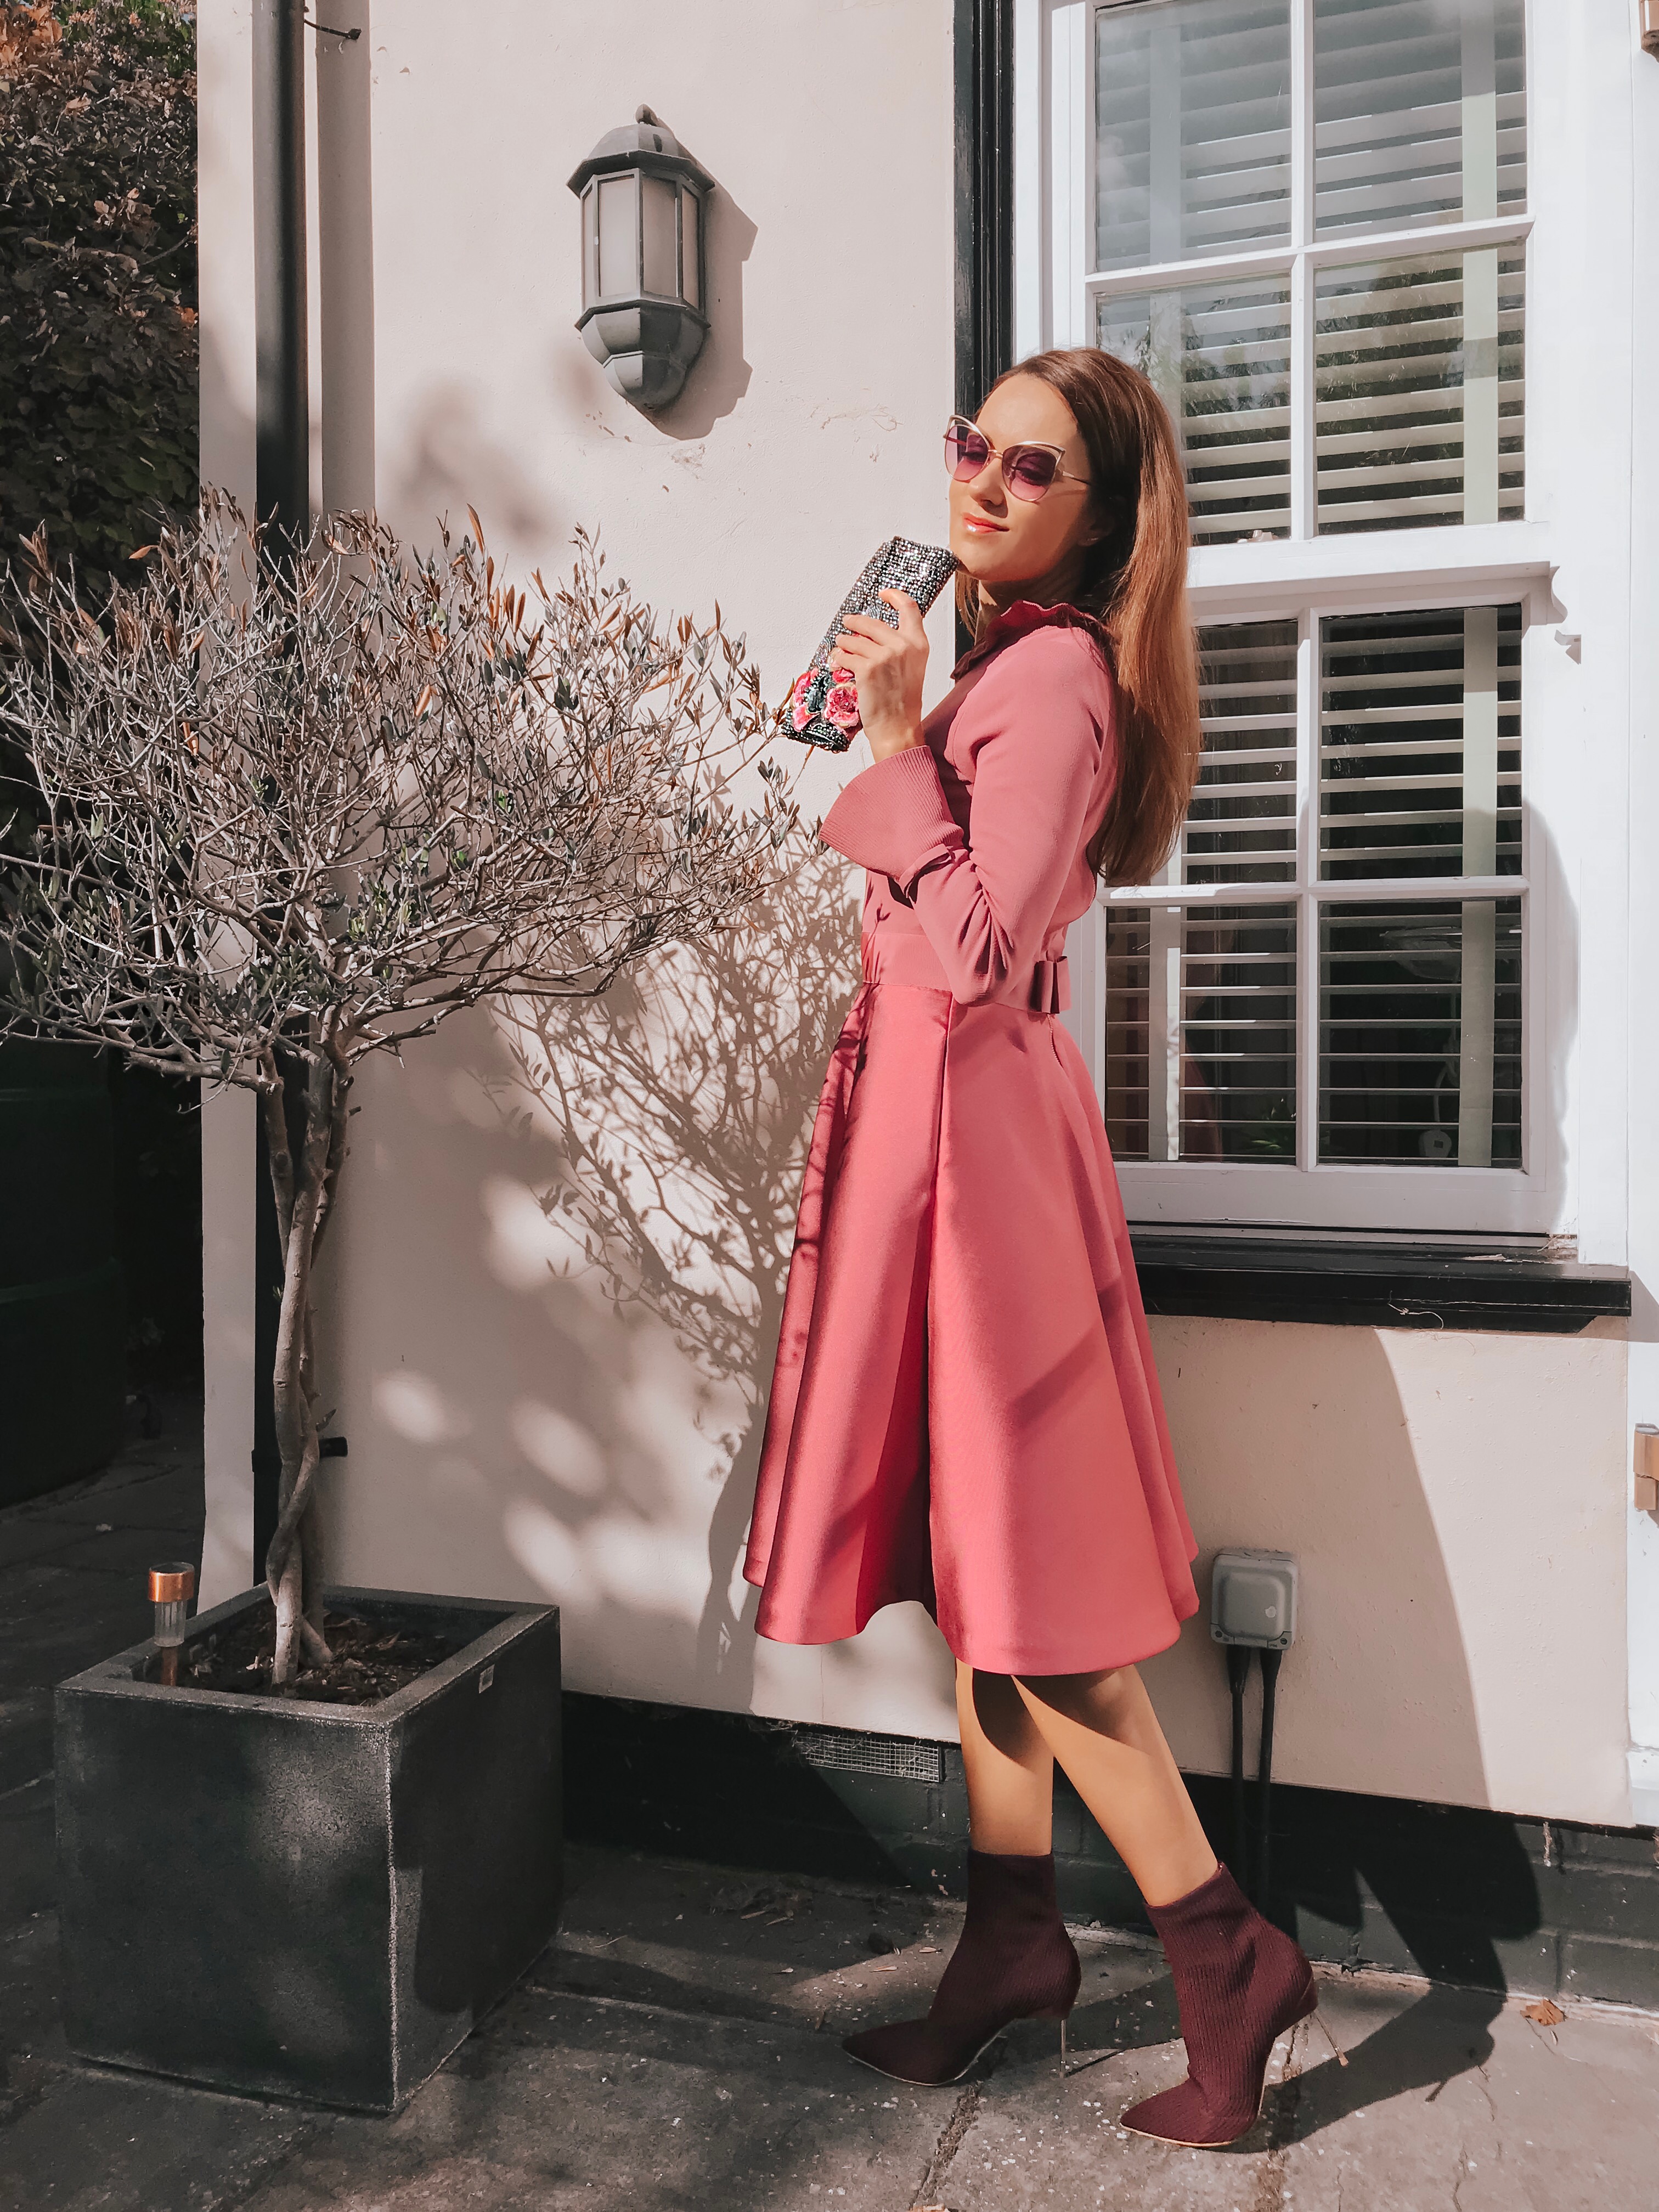 Elegant Duchess Fashion Ted Baker Pink Zadi Skater Dress | Kurt Geiger London Barbican-Wine-(Fabric) Knit Ankle Boot | Miu Miu Sunglasses | Swarovski earrings | Accessorize clutch bag